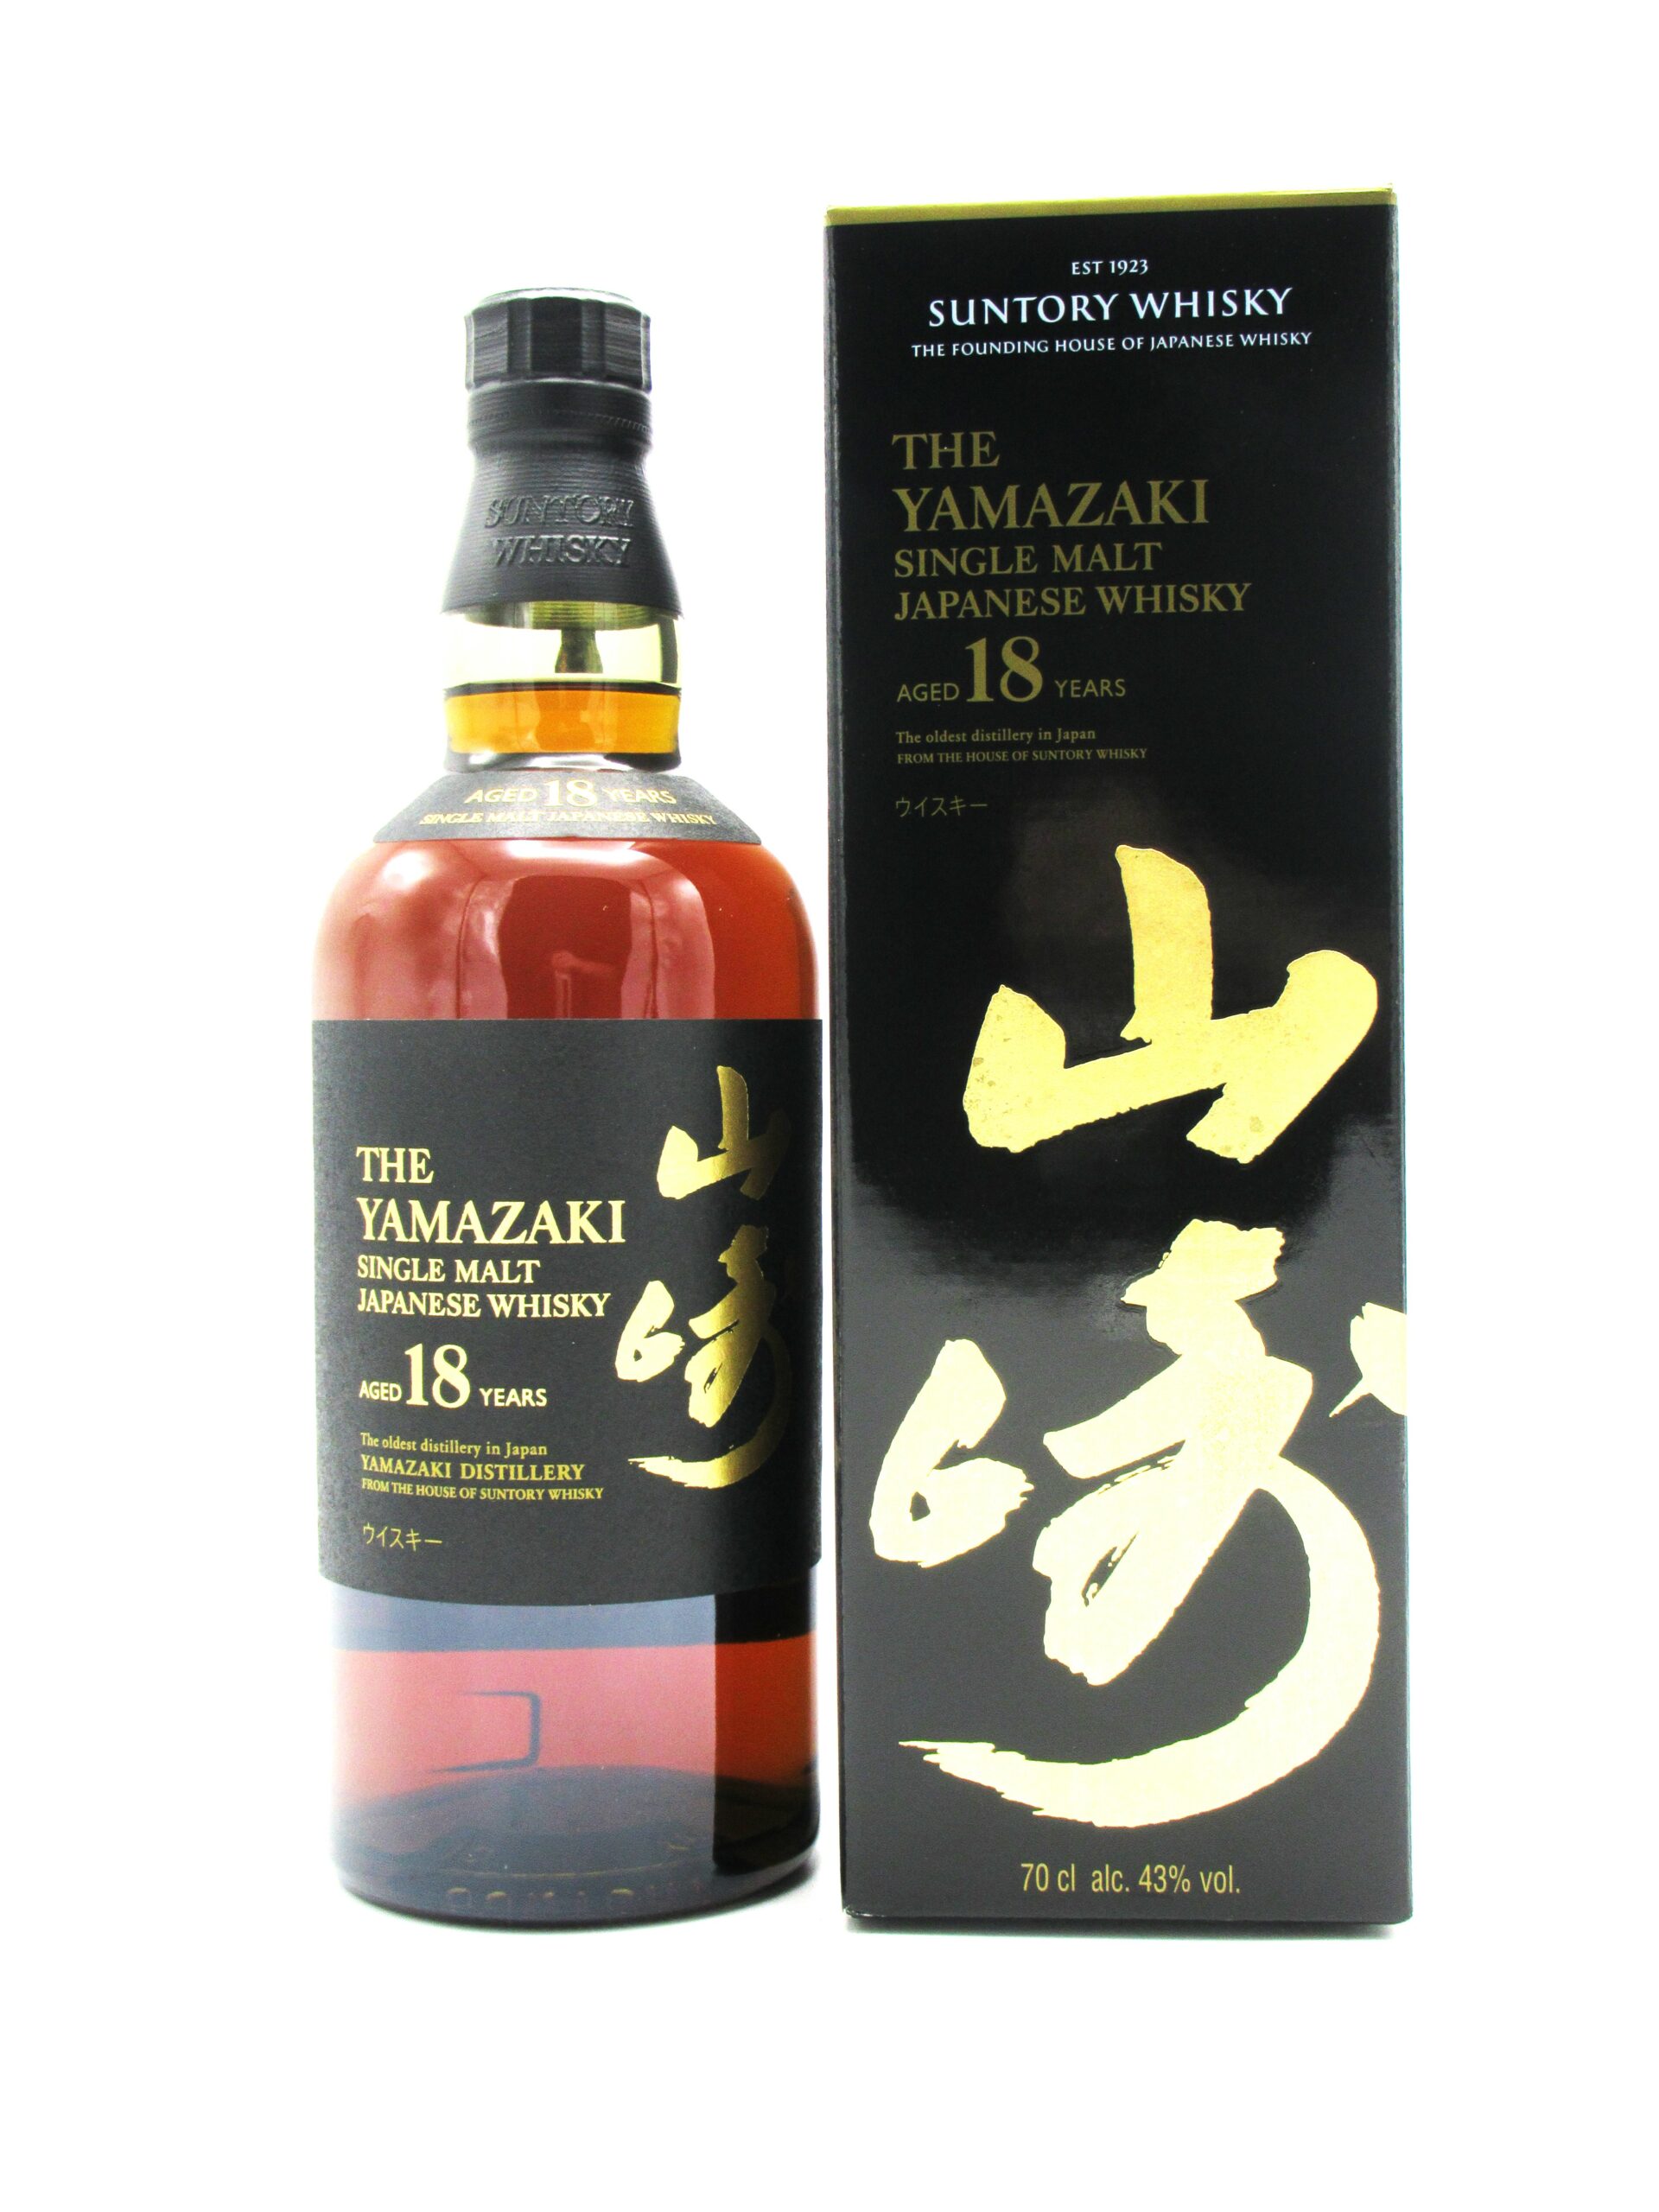 https://caviste-lehavre.fr/wp-content/uploads/whisky-japonais-the-yamazaki-single-malt-18-ans-suntory-43-70cl.-c-2-scaled.jpg